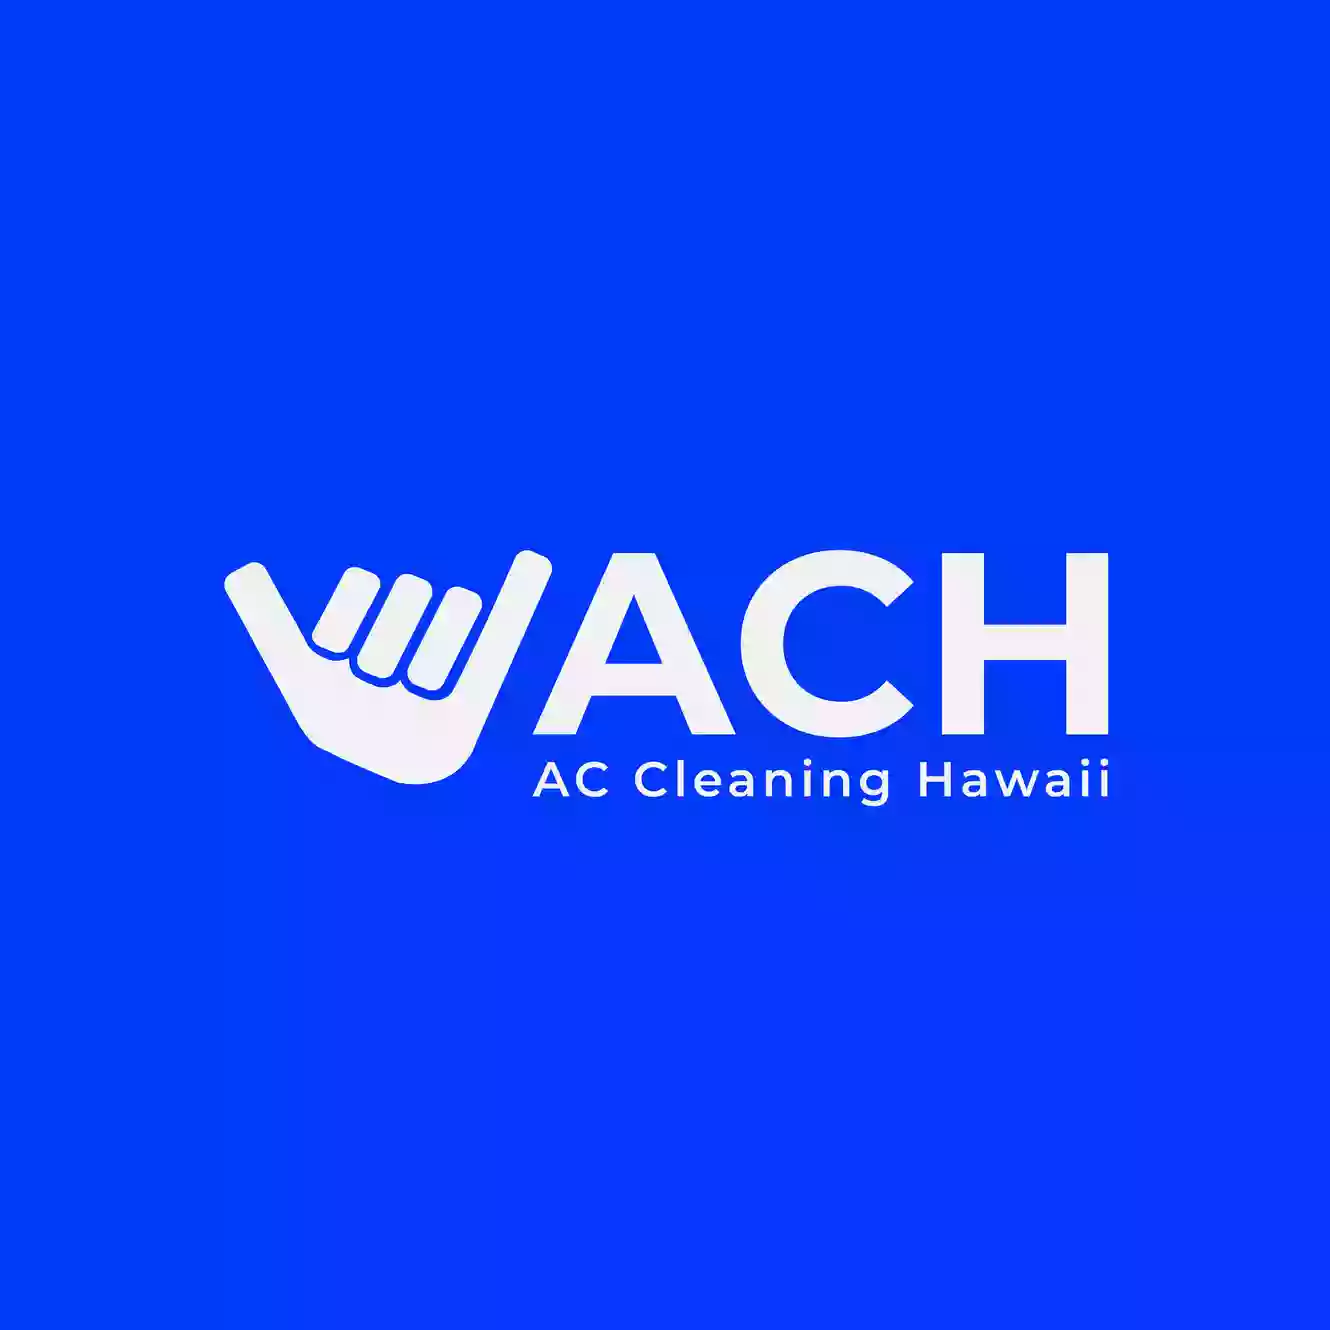 AC CLEANING HAWAII